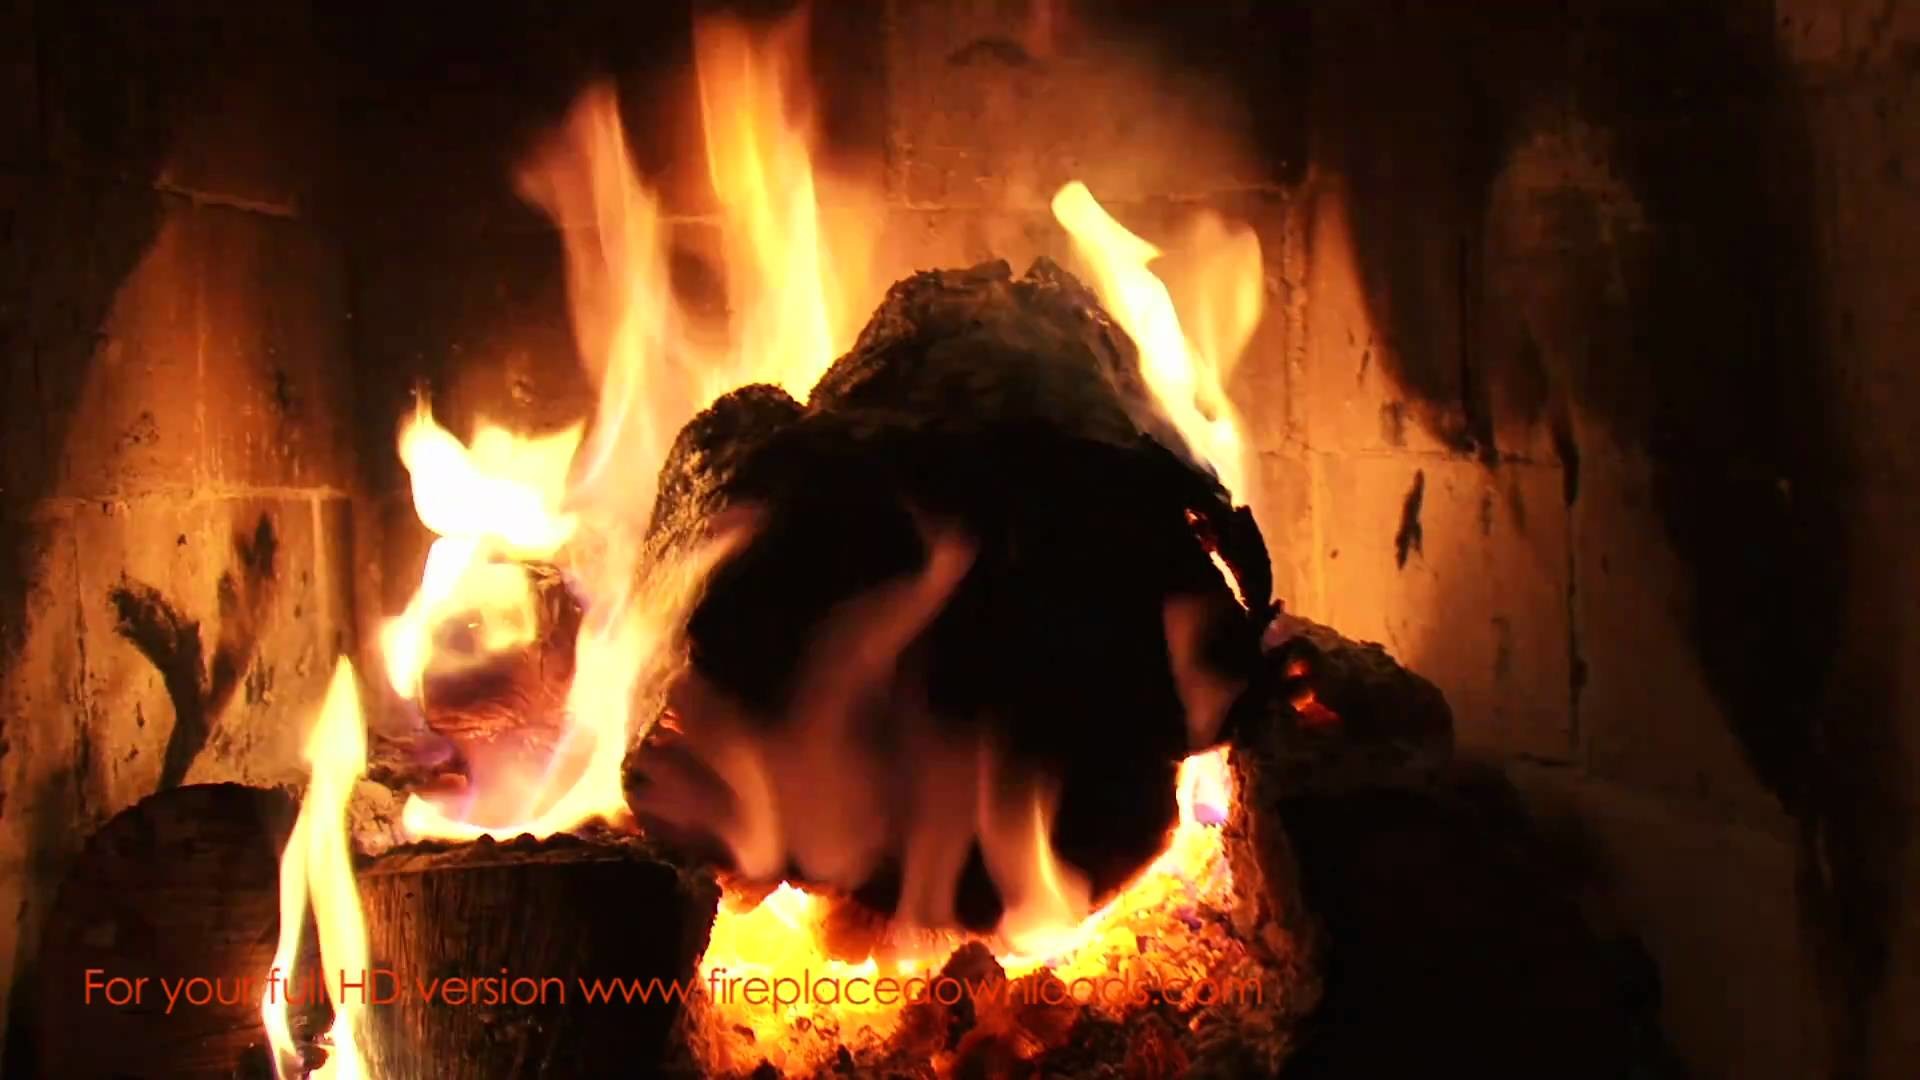 1920x1080 Virtual HD Fireplace video 1080p (Large Log fire) - Fireplace Downloads -  YouTube